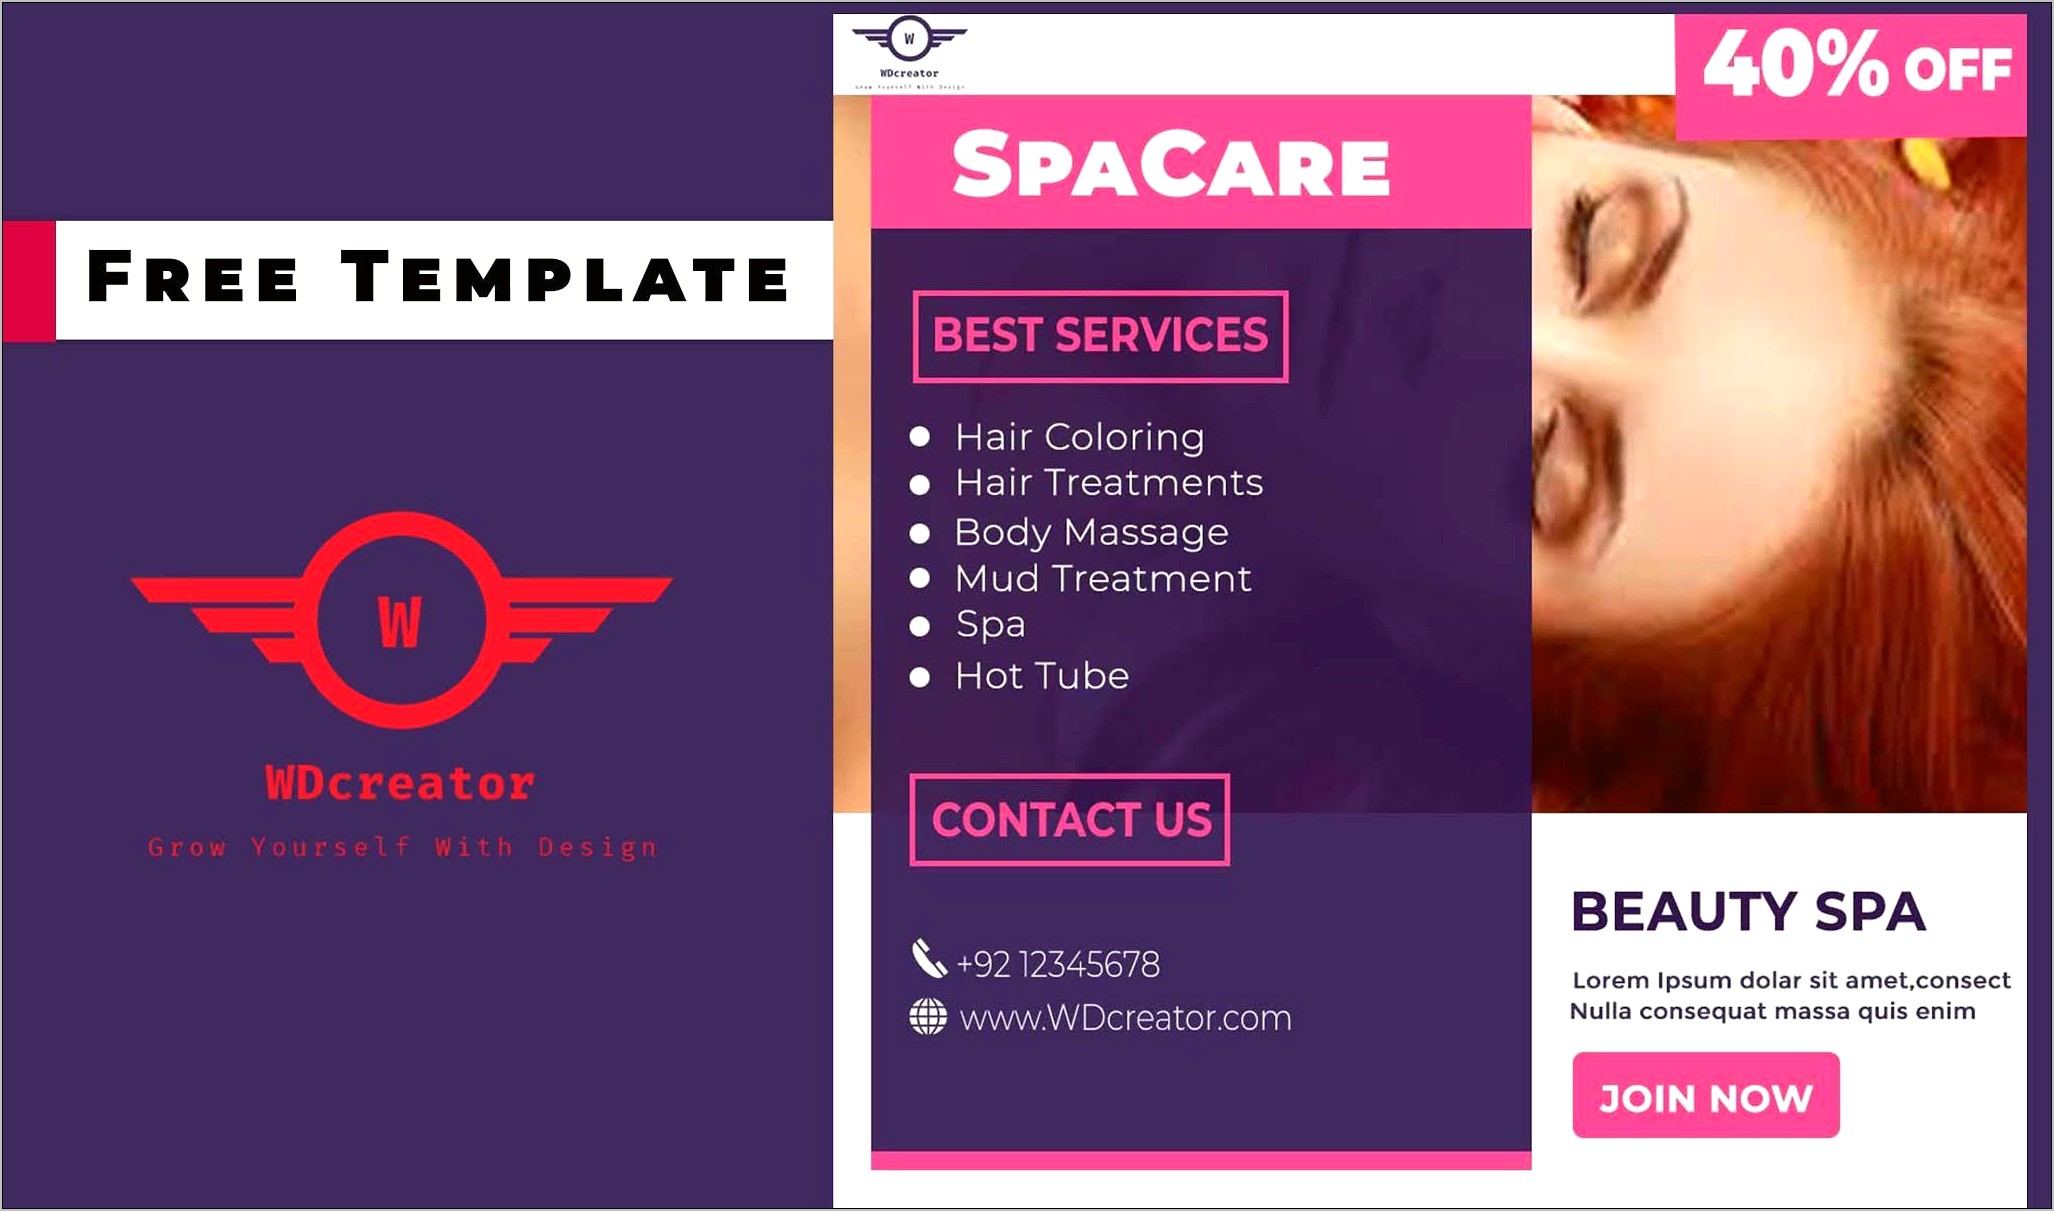 Beauty Salon Flyer Template Free Psd